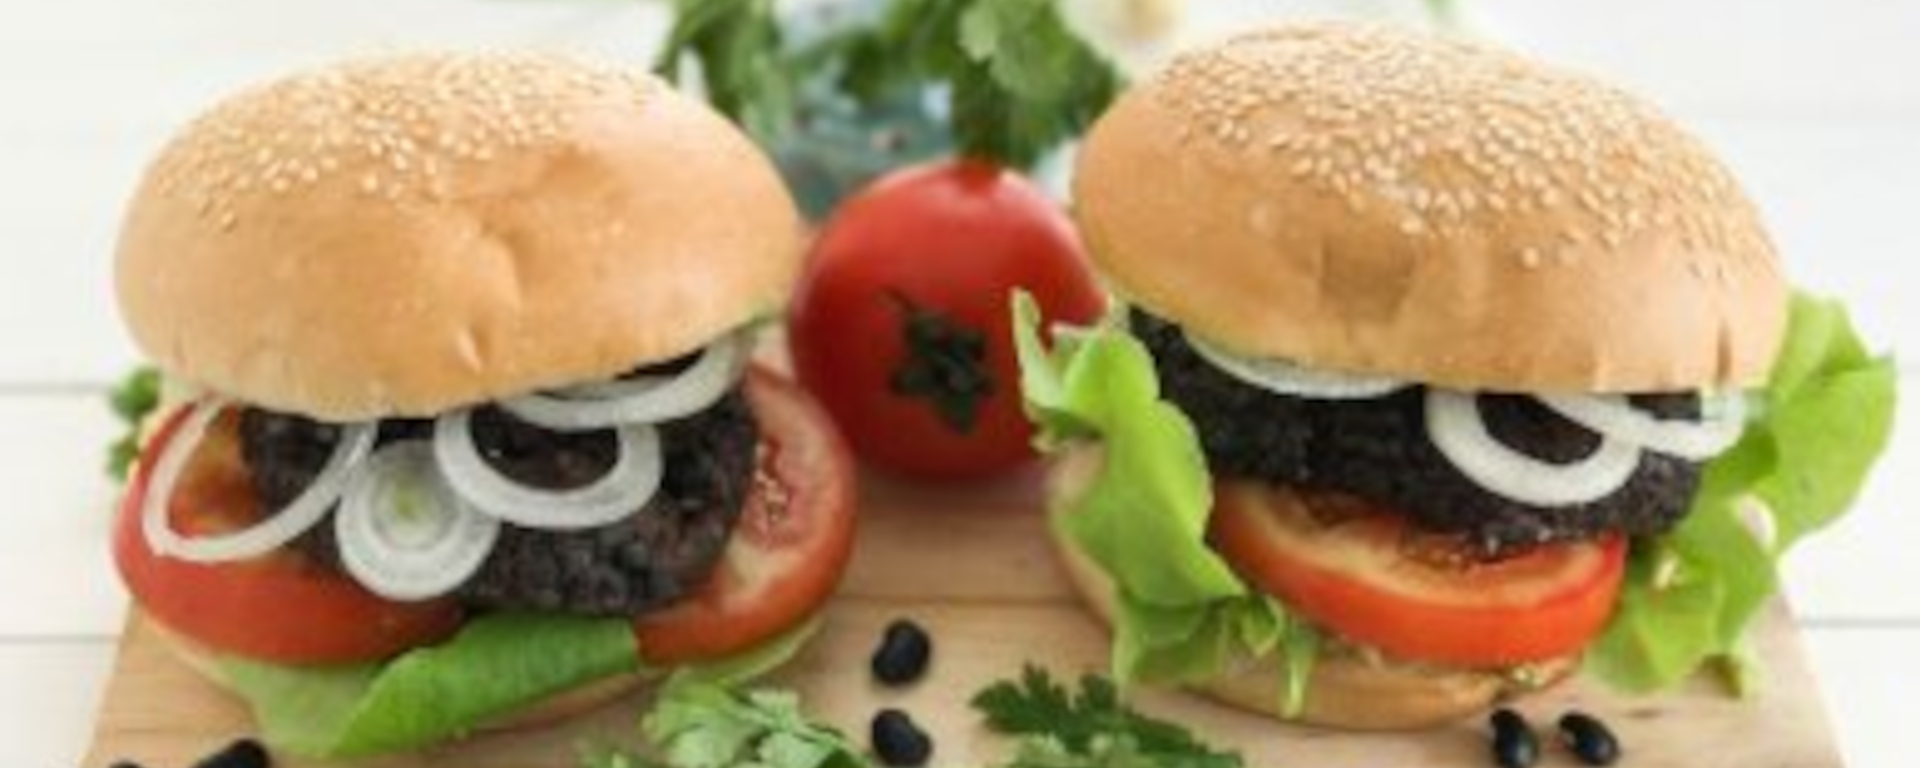 LuvMyRecipe.com - Black Bean Burger with Wild Mushrooms, Black Rice and Fresh Coriander Featured